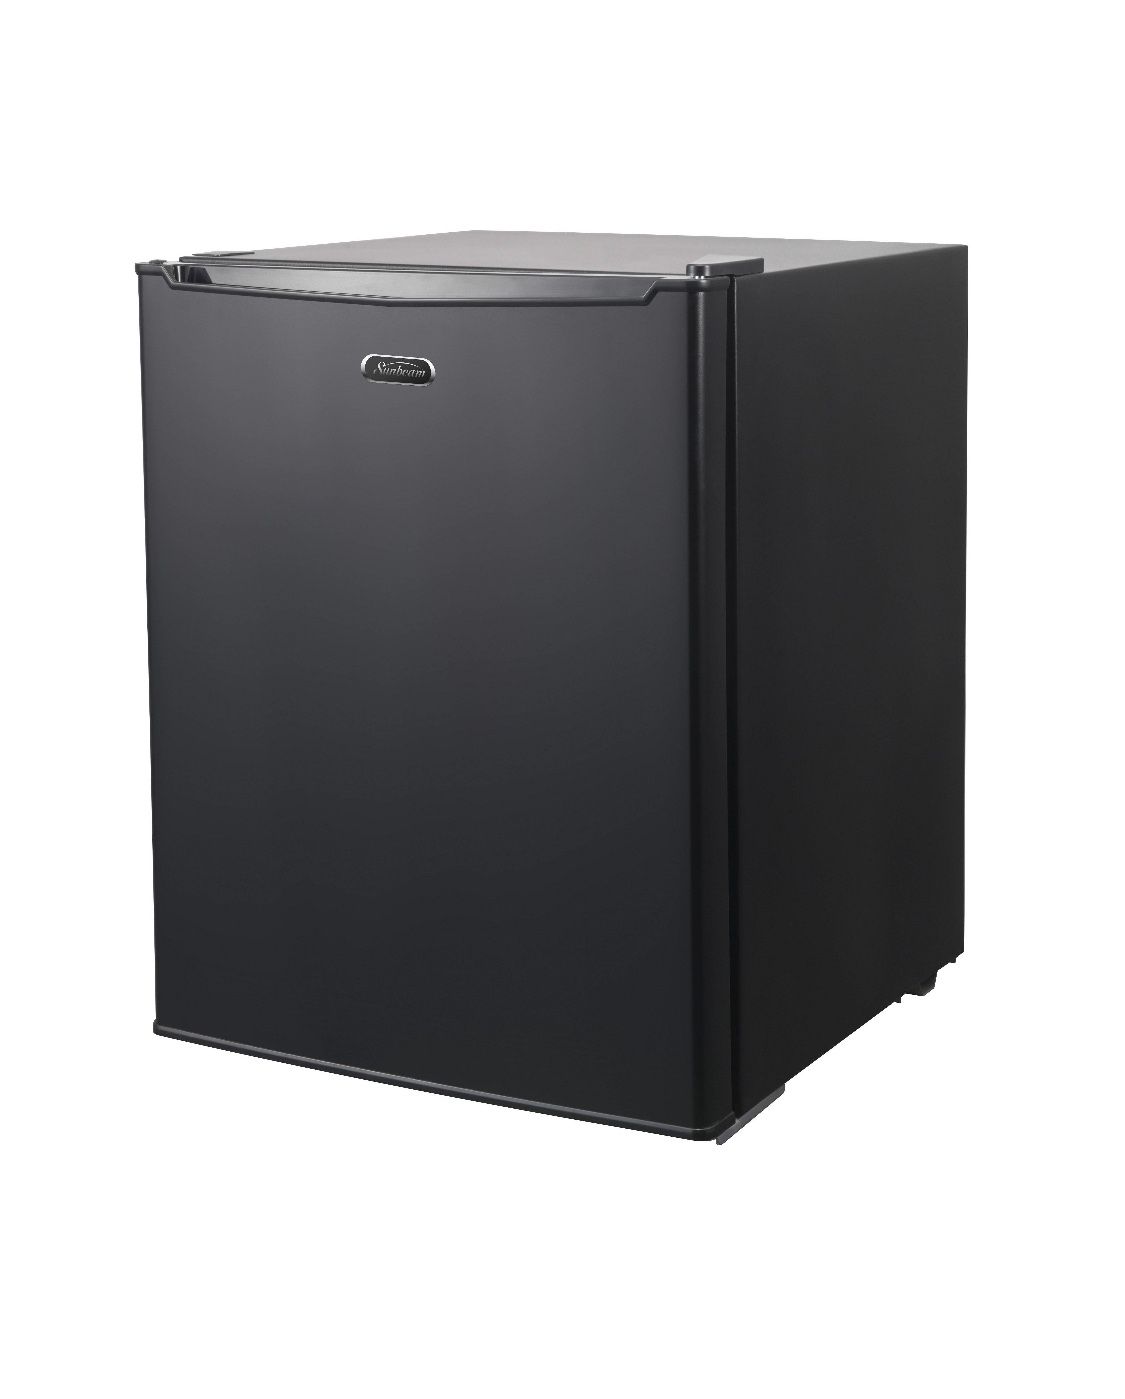 2.7 cu ft Compact Refrigerator - Black. ** OPEN BOX**